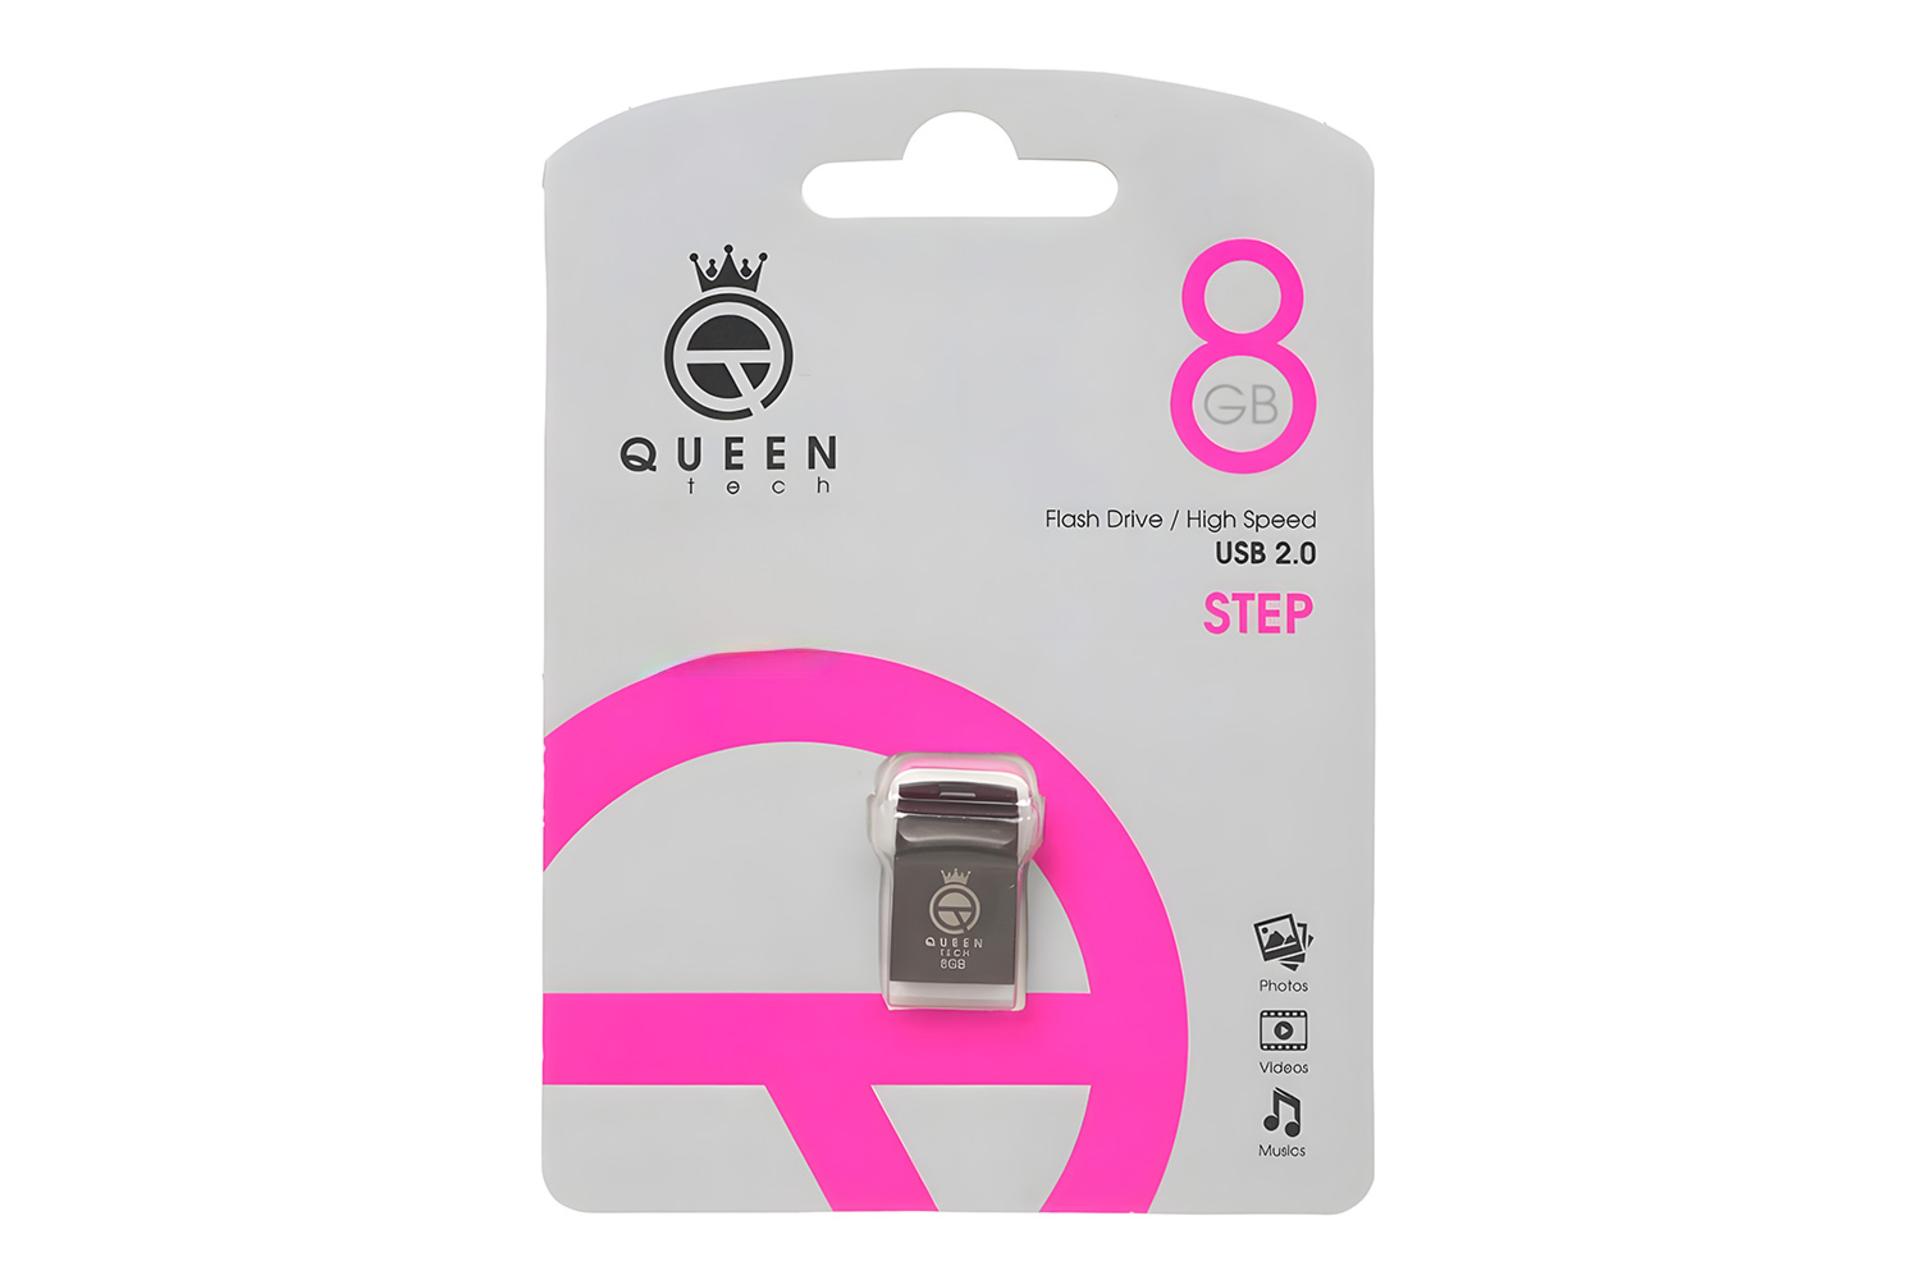 جعبه فلش مموری کوئین تک Queen Tech STEP 8GB USB 2.0